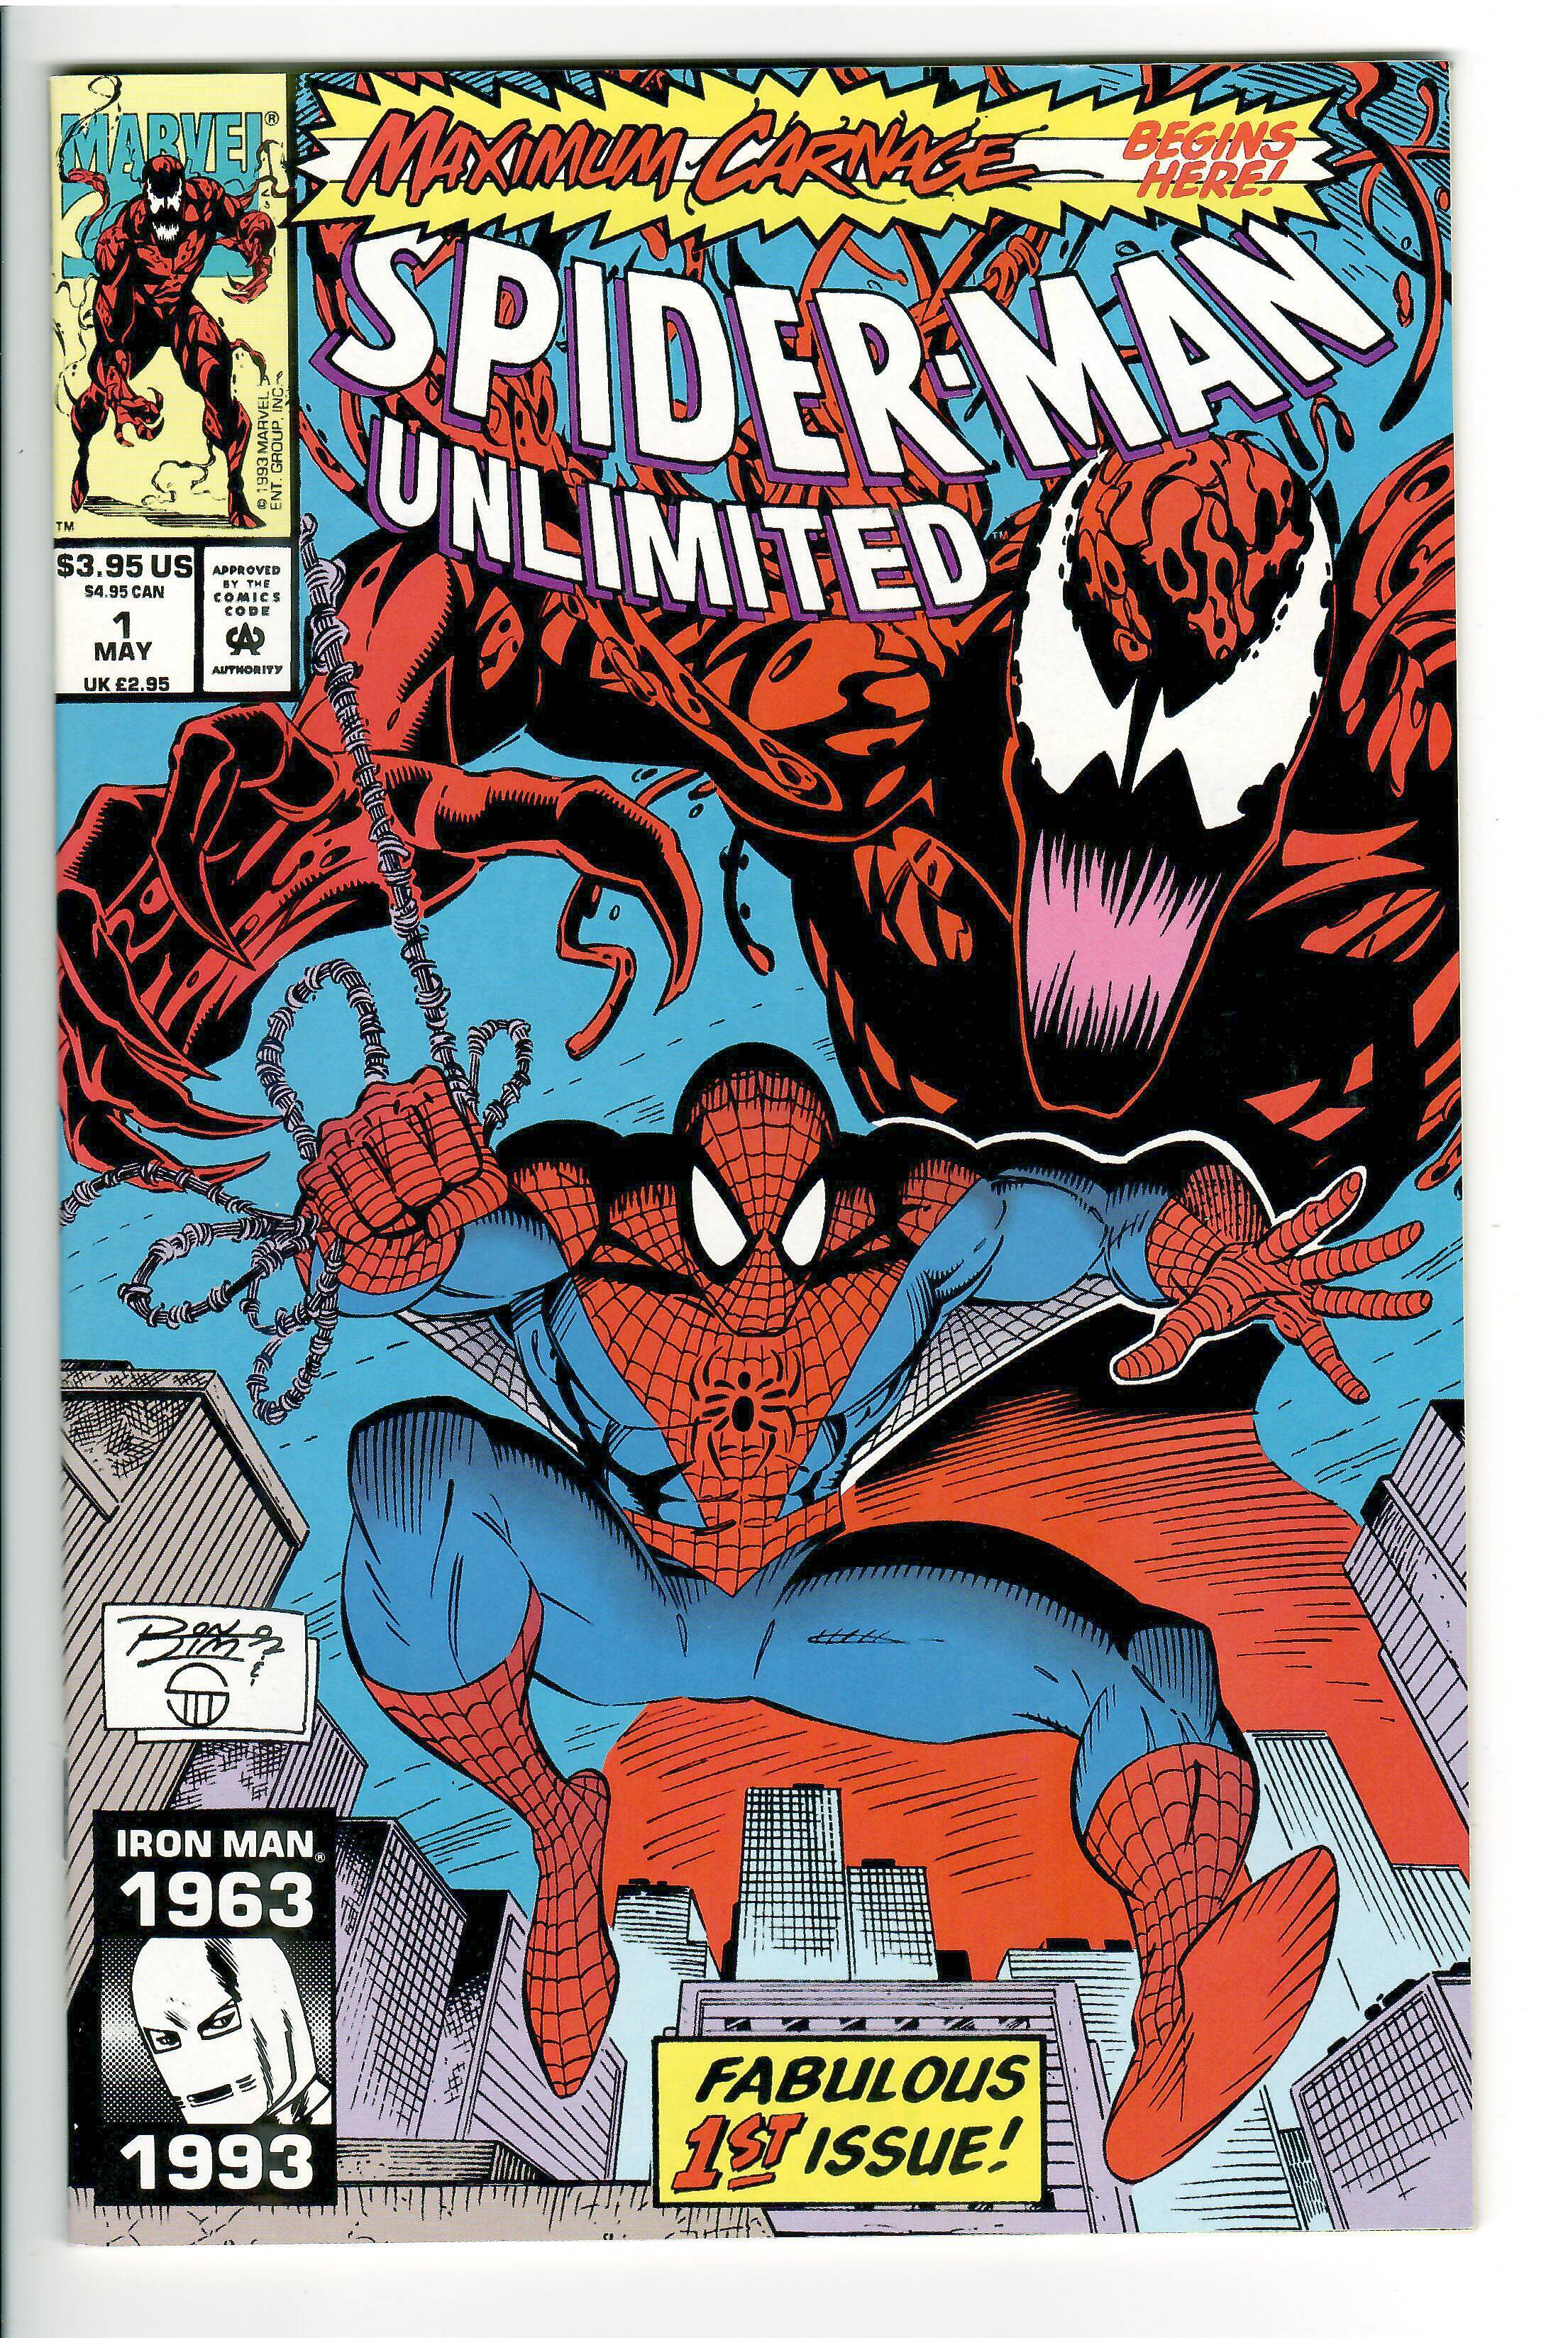 Spiderman Unlimited 1 NM ;1St APP Shriek;Maximum Carnage #1 !! Killer  Copy!! | Comic Books - Modern Age, Marvel, Superhero / HipComic